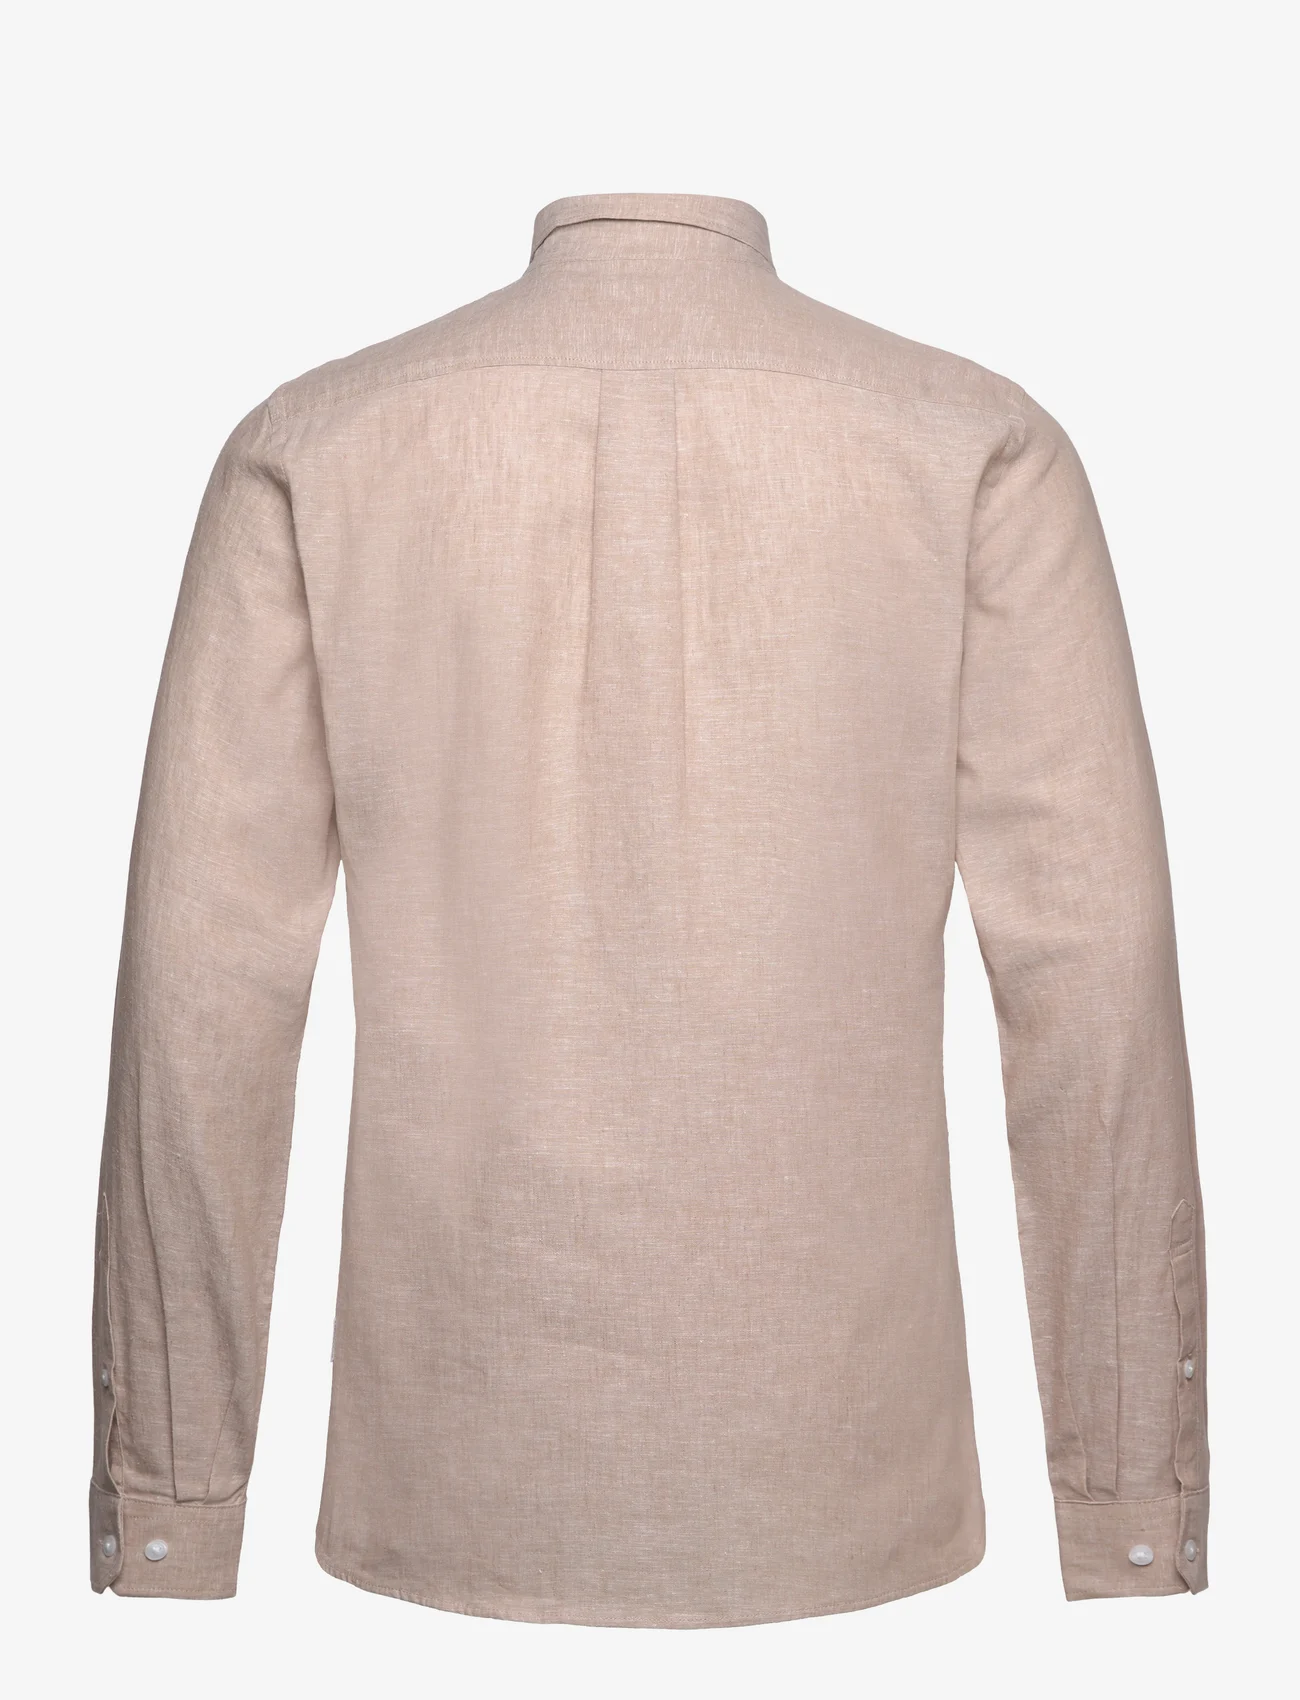 Lindbergh - Linen/cotton shirt L/S - lina krekli - sand - 1